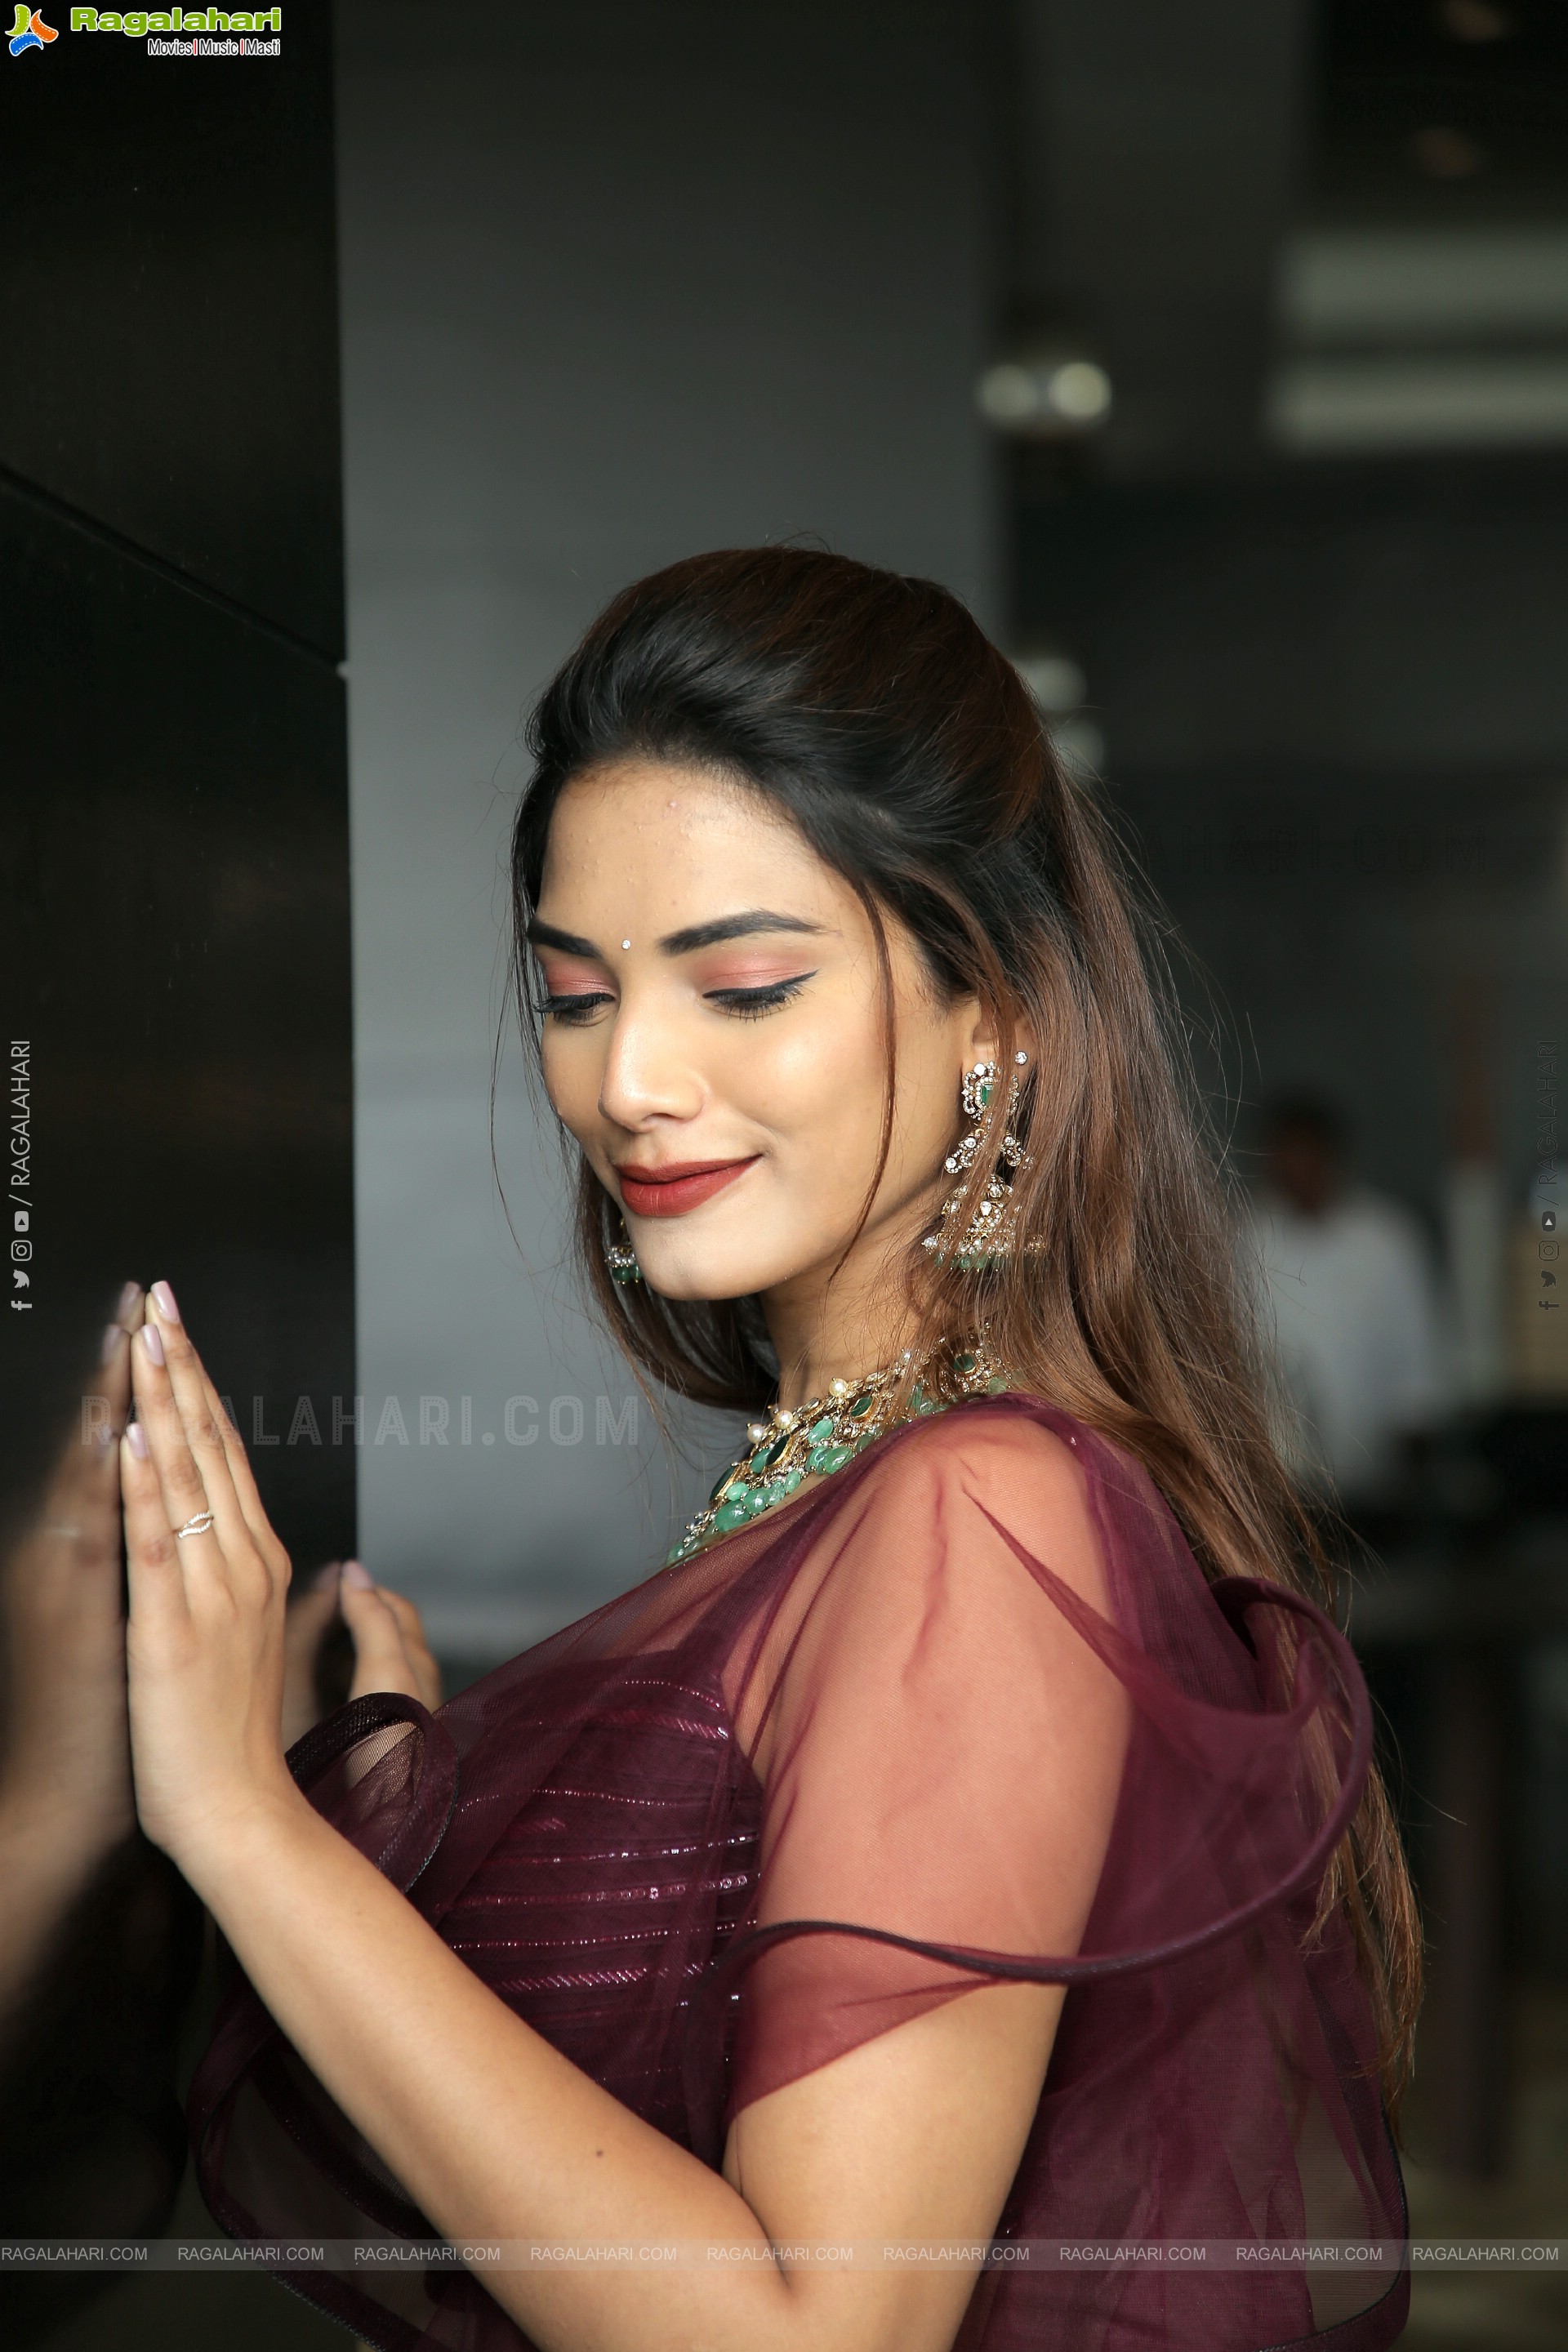 Harshini Balla Poses With Jewellery, HD Photo Gallery